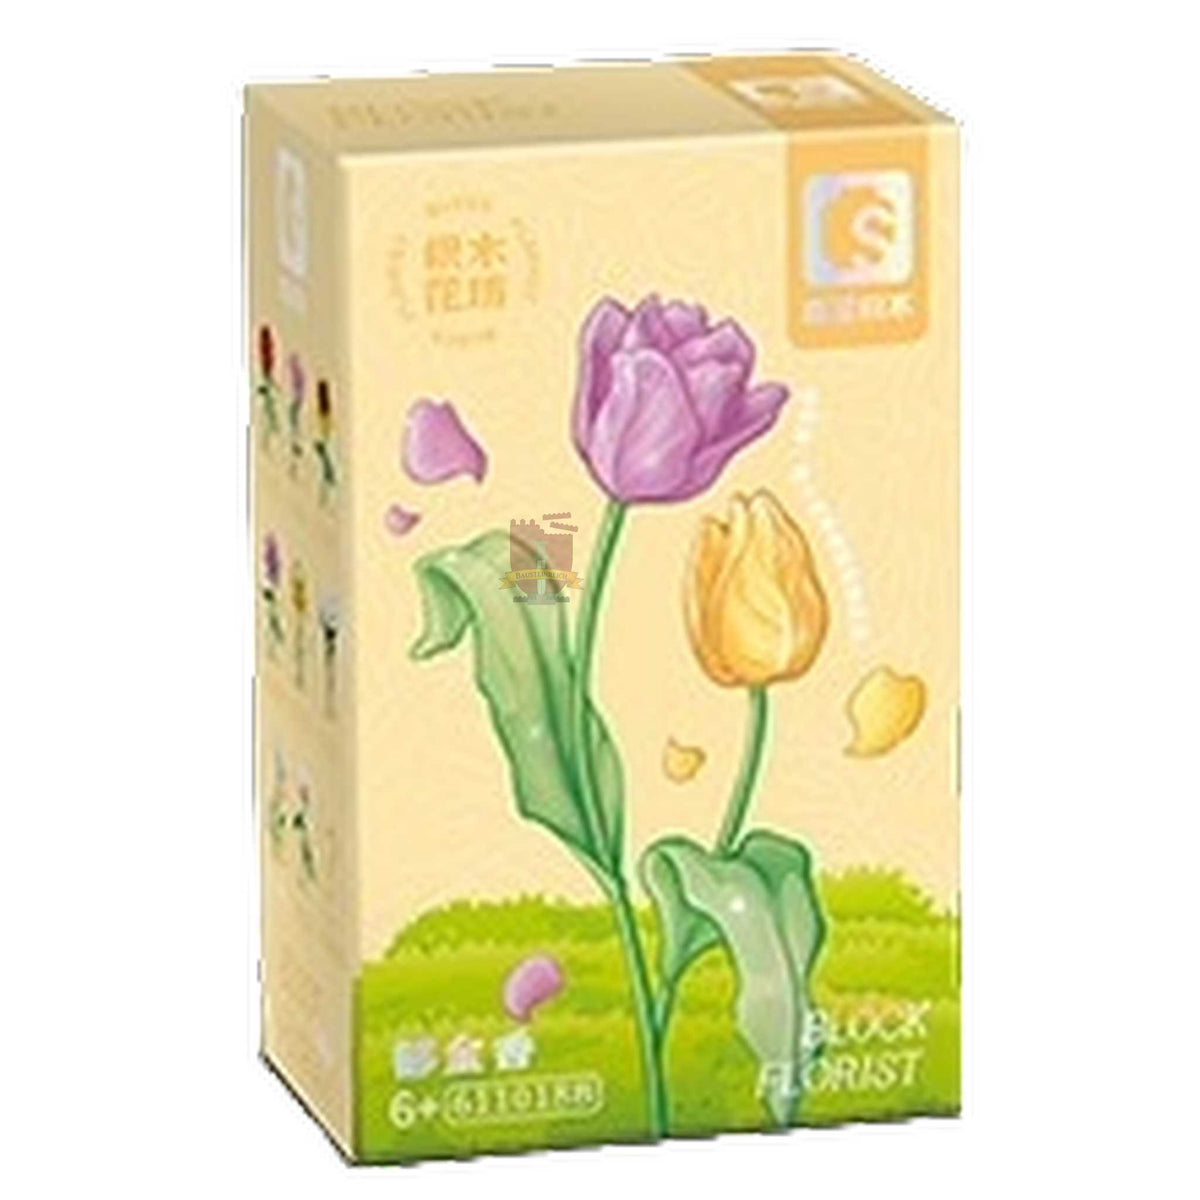 611018B - Tulpen lila/gelb (Sembo)